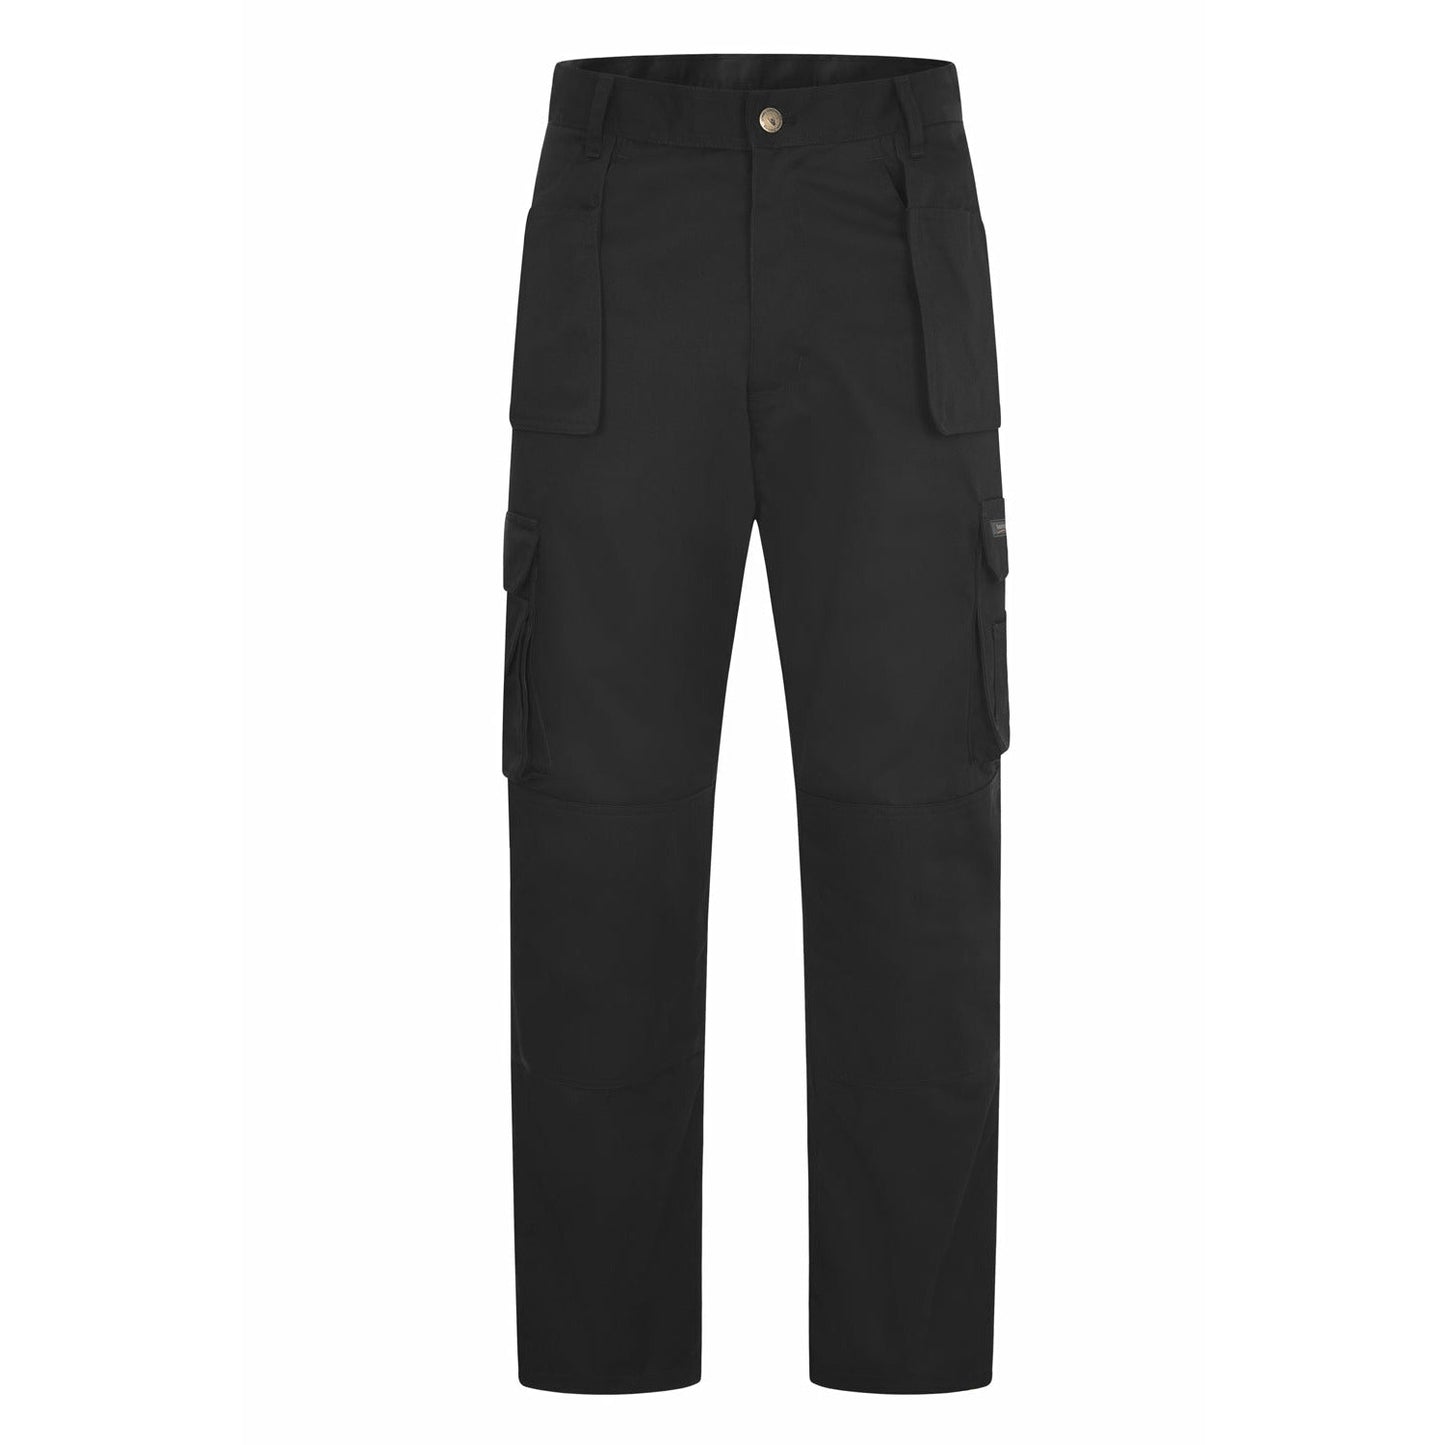 Black super pro trouser - regular - Black